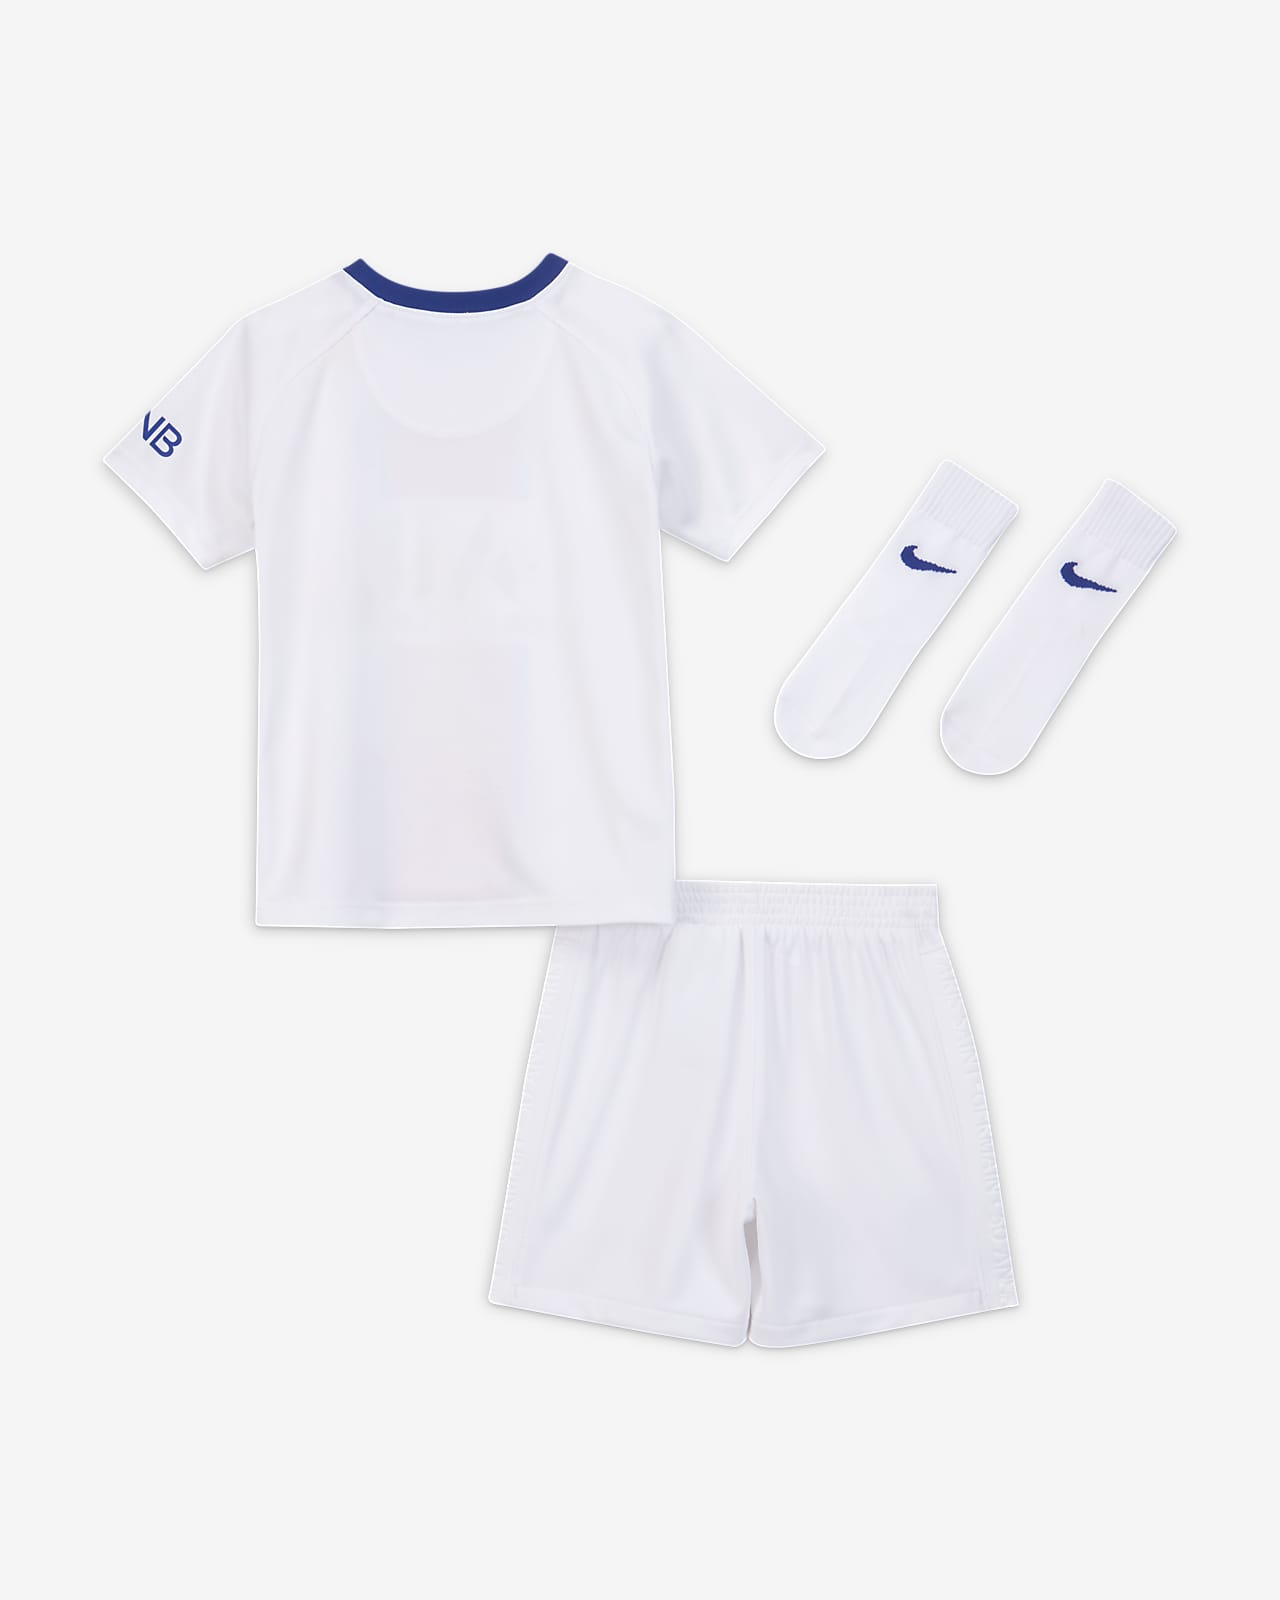 Nike公式 パリ サンジェルマン 21 アウェイ ベビー キッズ サッカーキット オンラインストア 通販サイト